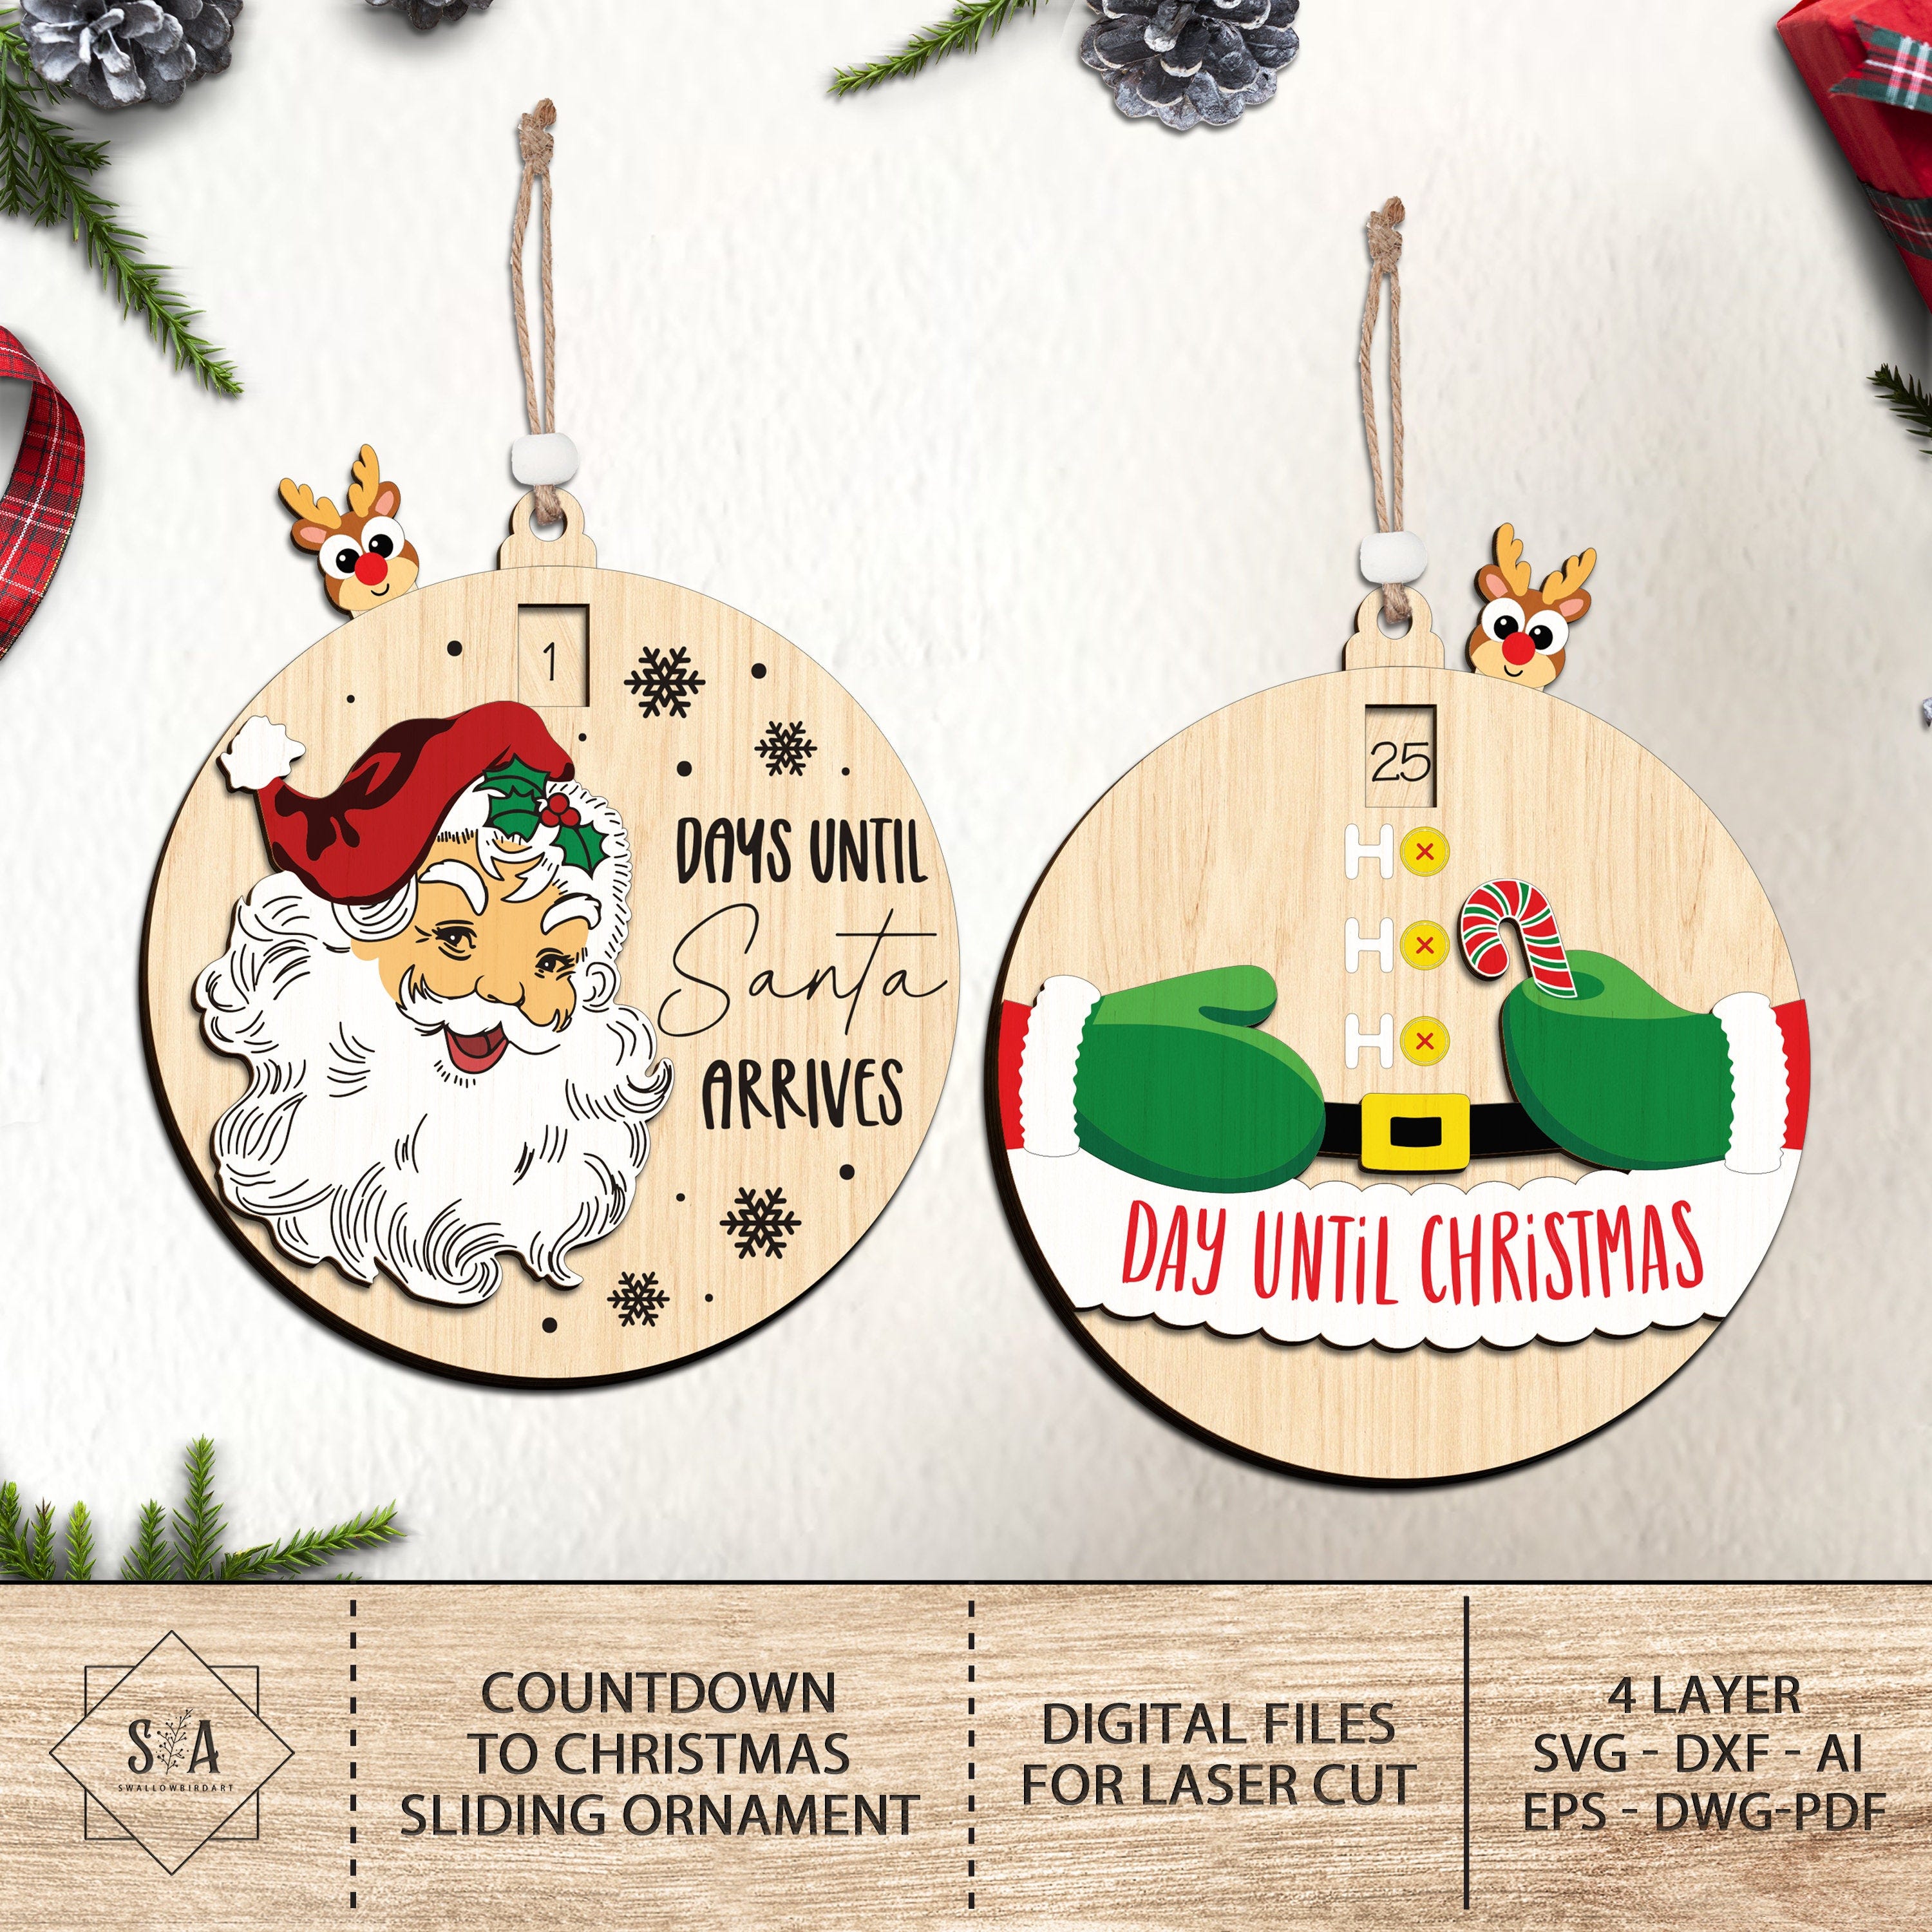 Santa Claus Countdown to Christmas Sliding Ornament Svg, Christmas Countdown Calendar svg, Christmas Reindeer Ornament, Glowforge svg files